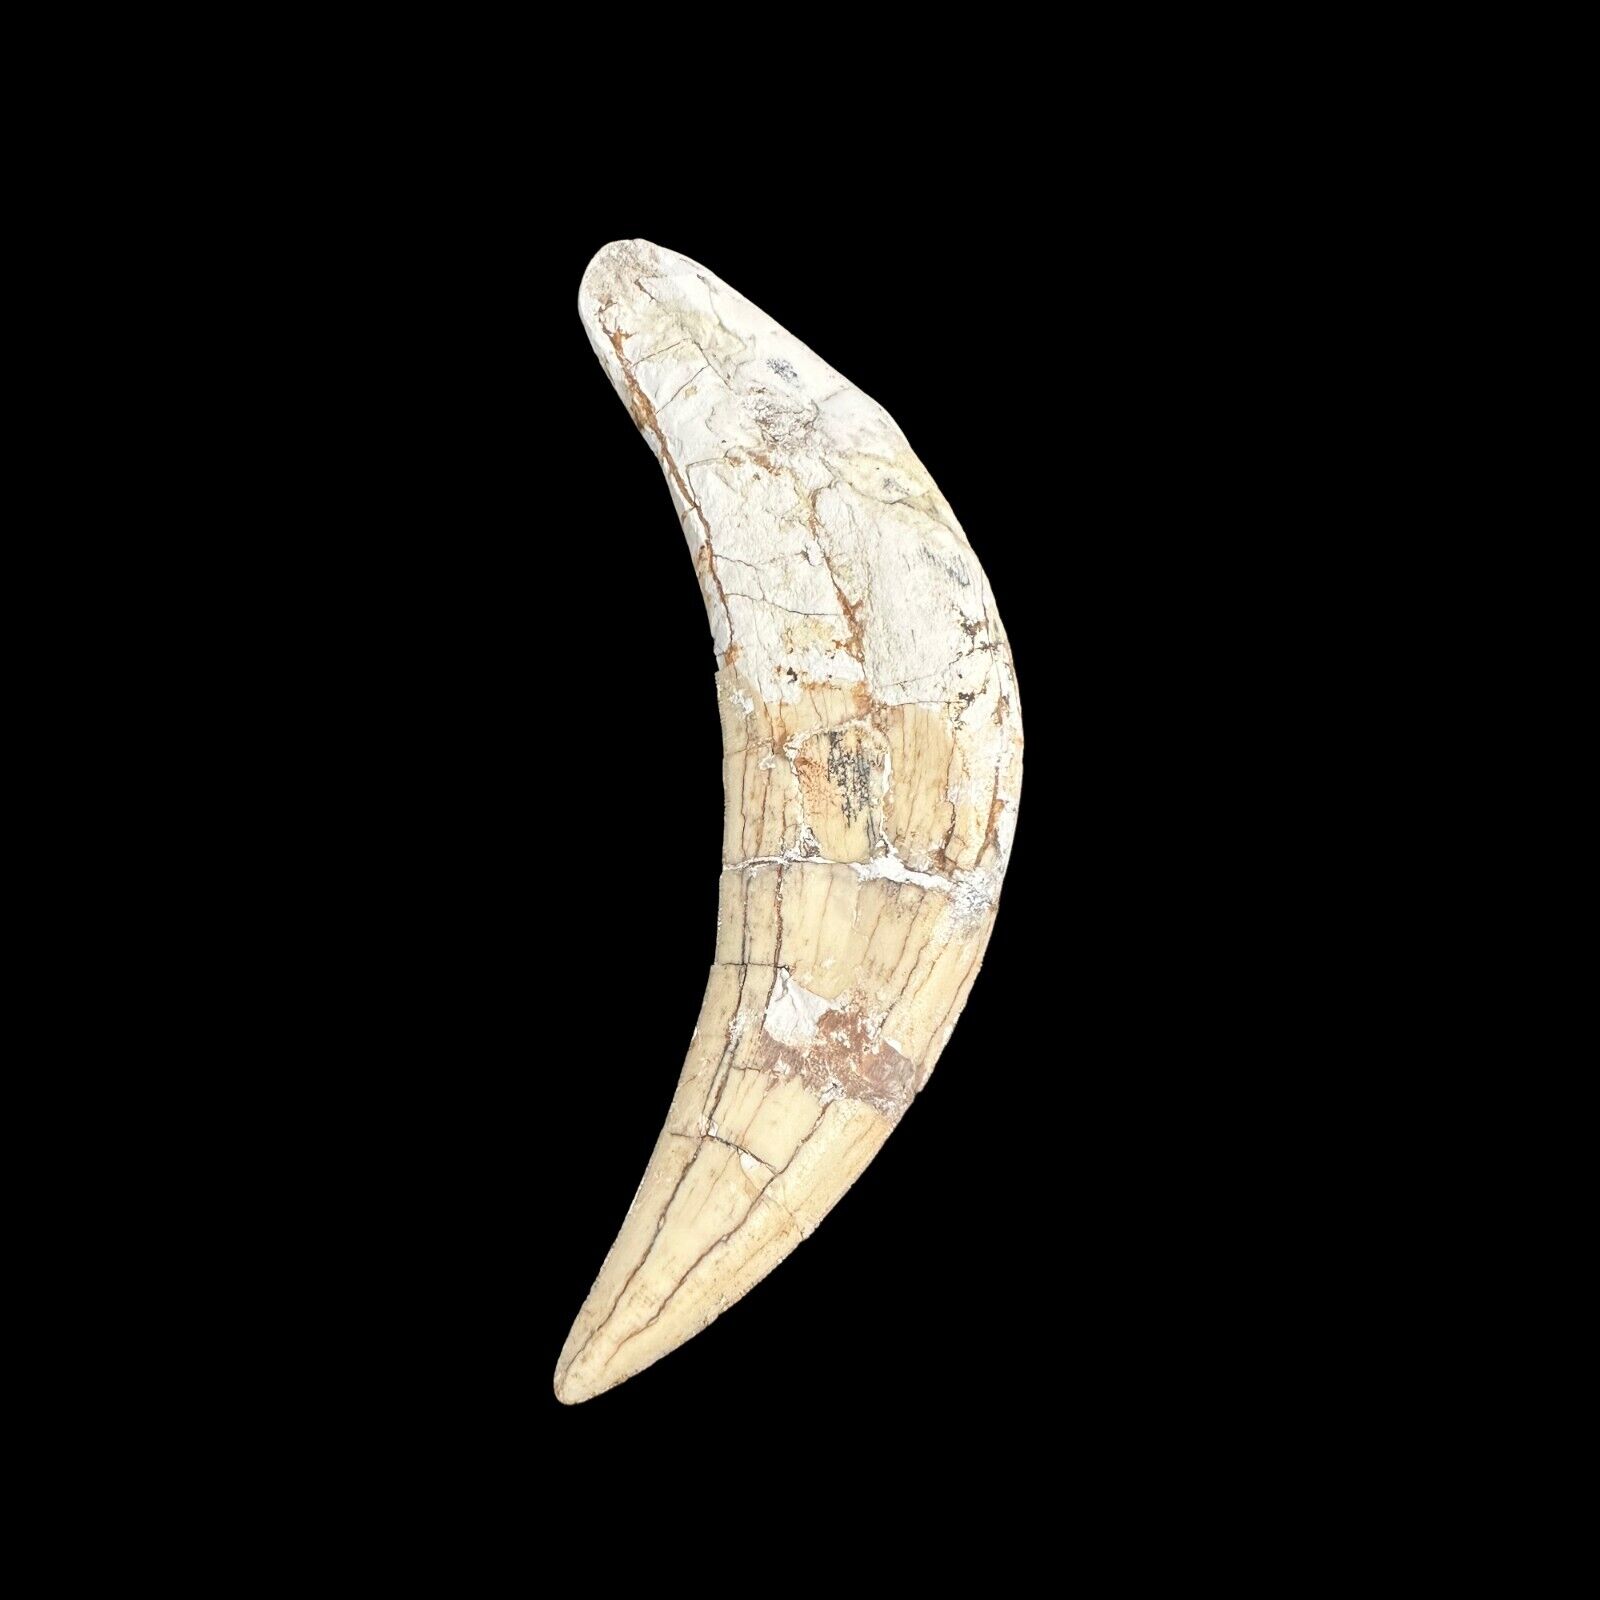 Machairodus Saber Tooth Cat Saber Tooth - Miocene Era- Eurasia